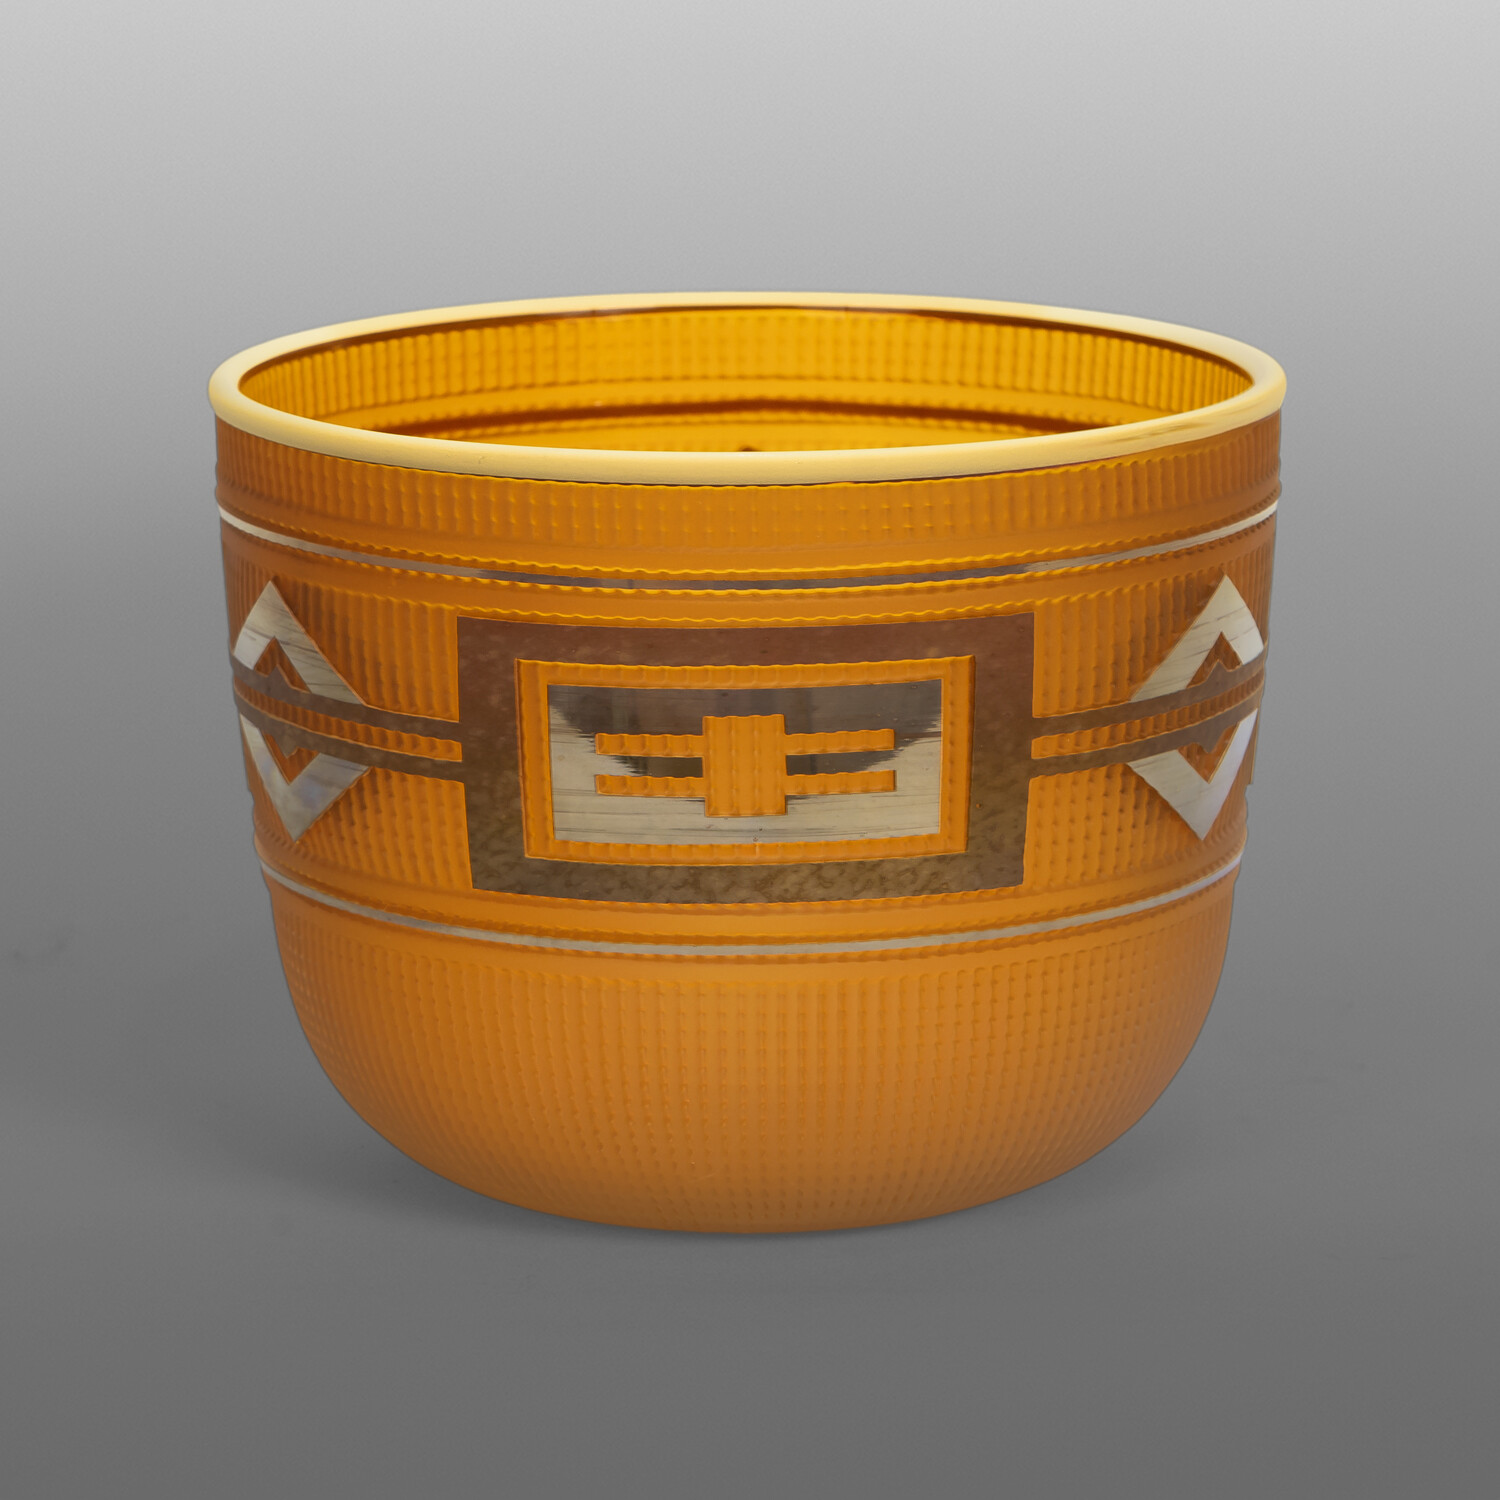 Amber Yellow Basket
Preston Singletary
TlingitBlown & sand-carved glass
5 ¼" x 7"
$3500